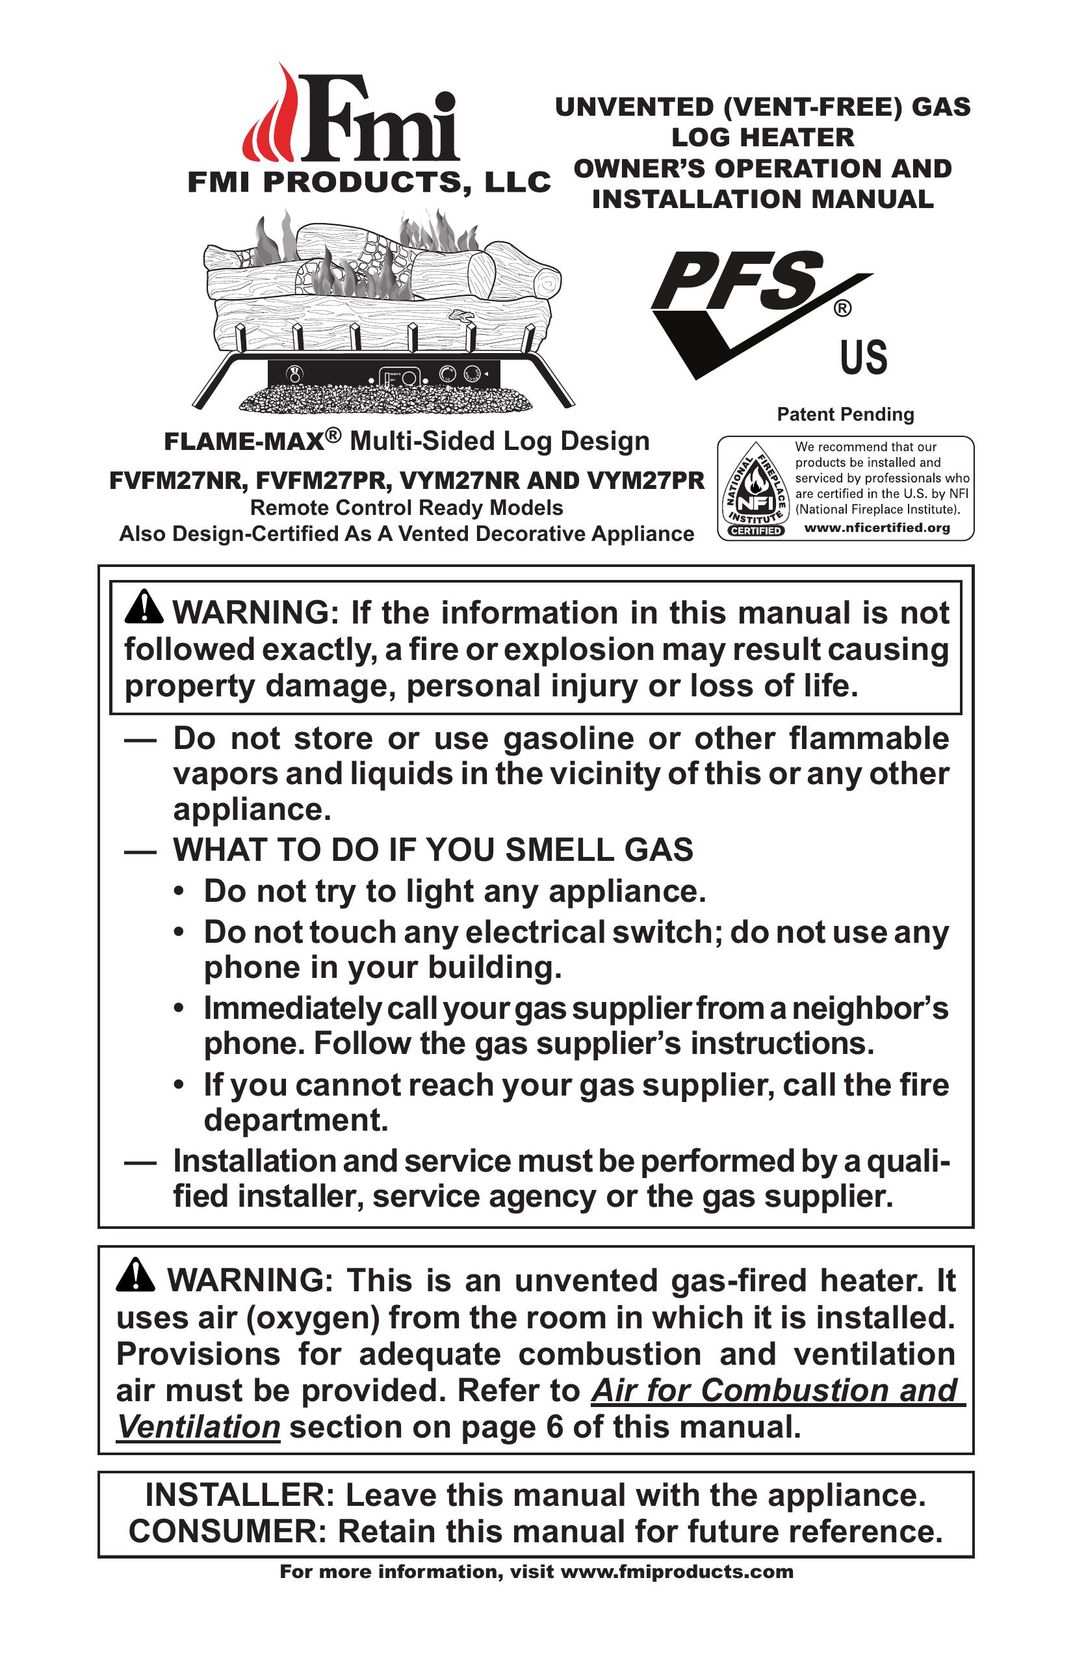 FMI FVFM27NR Gas Heater User Manual